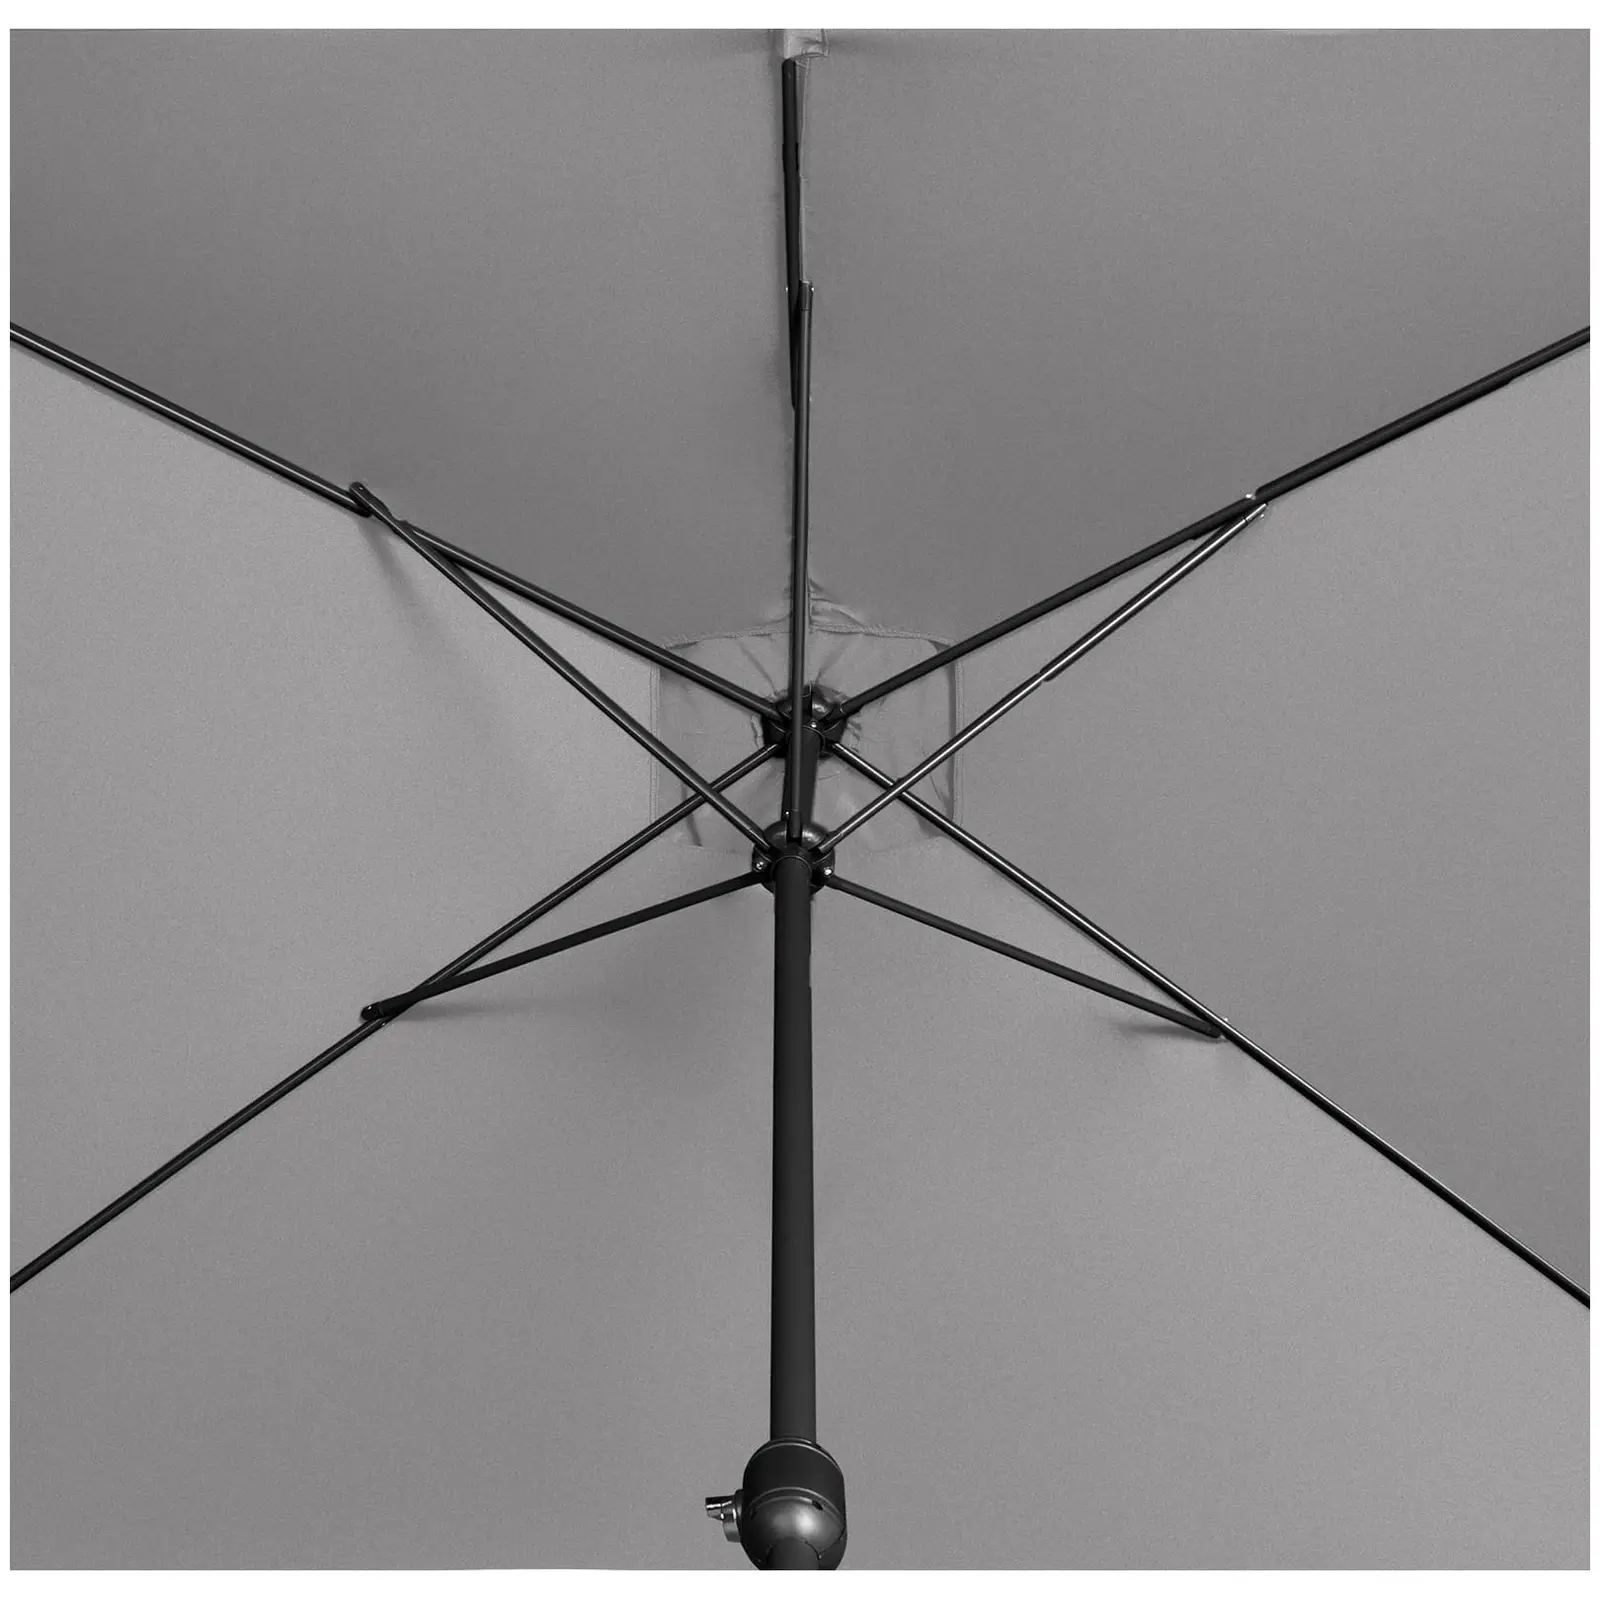 Factory second Large Outdoor Umbrella - dark grey - rectangular - 200 x 300 cm